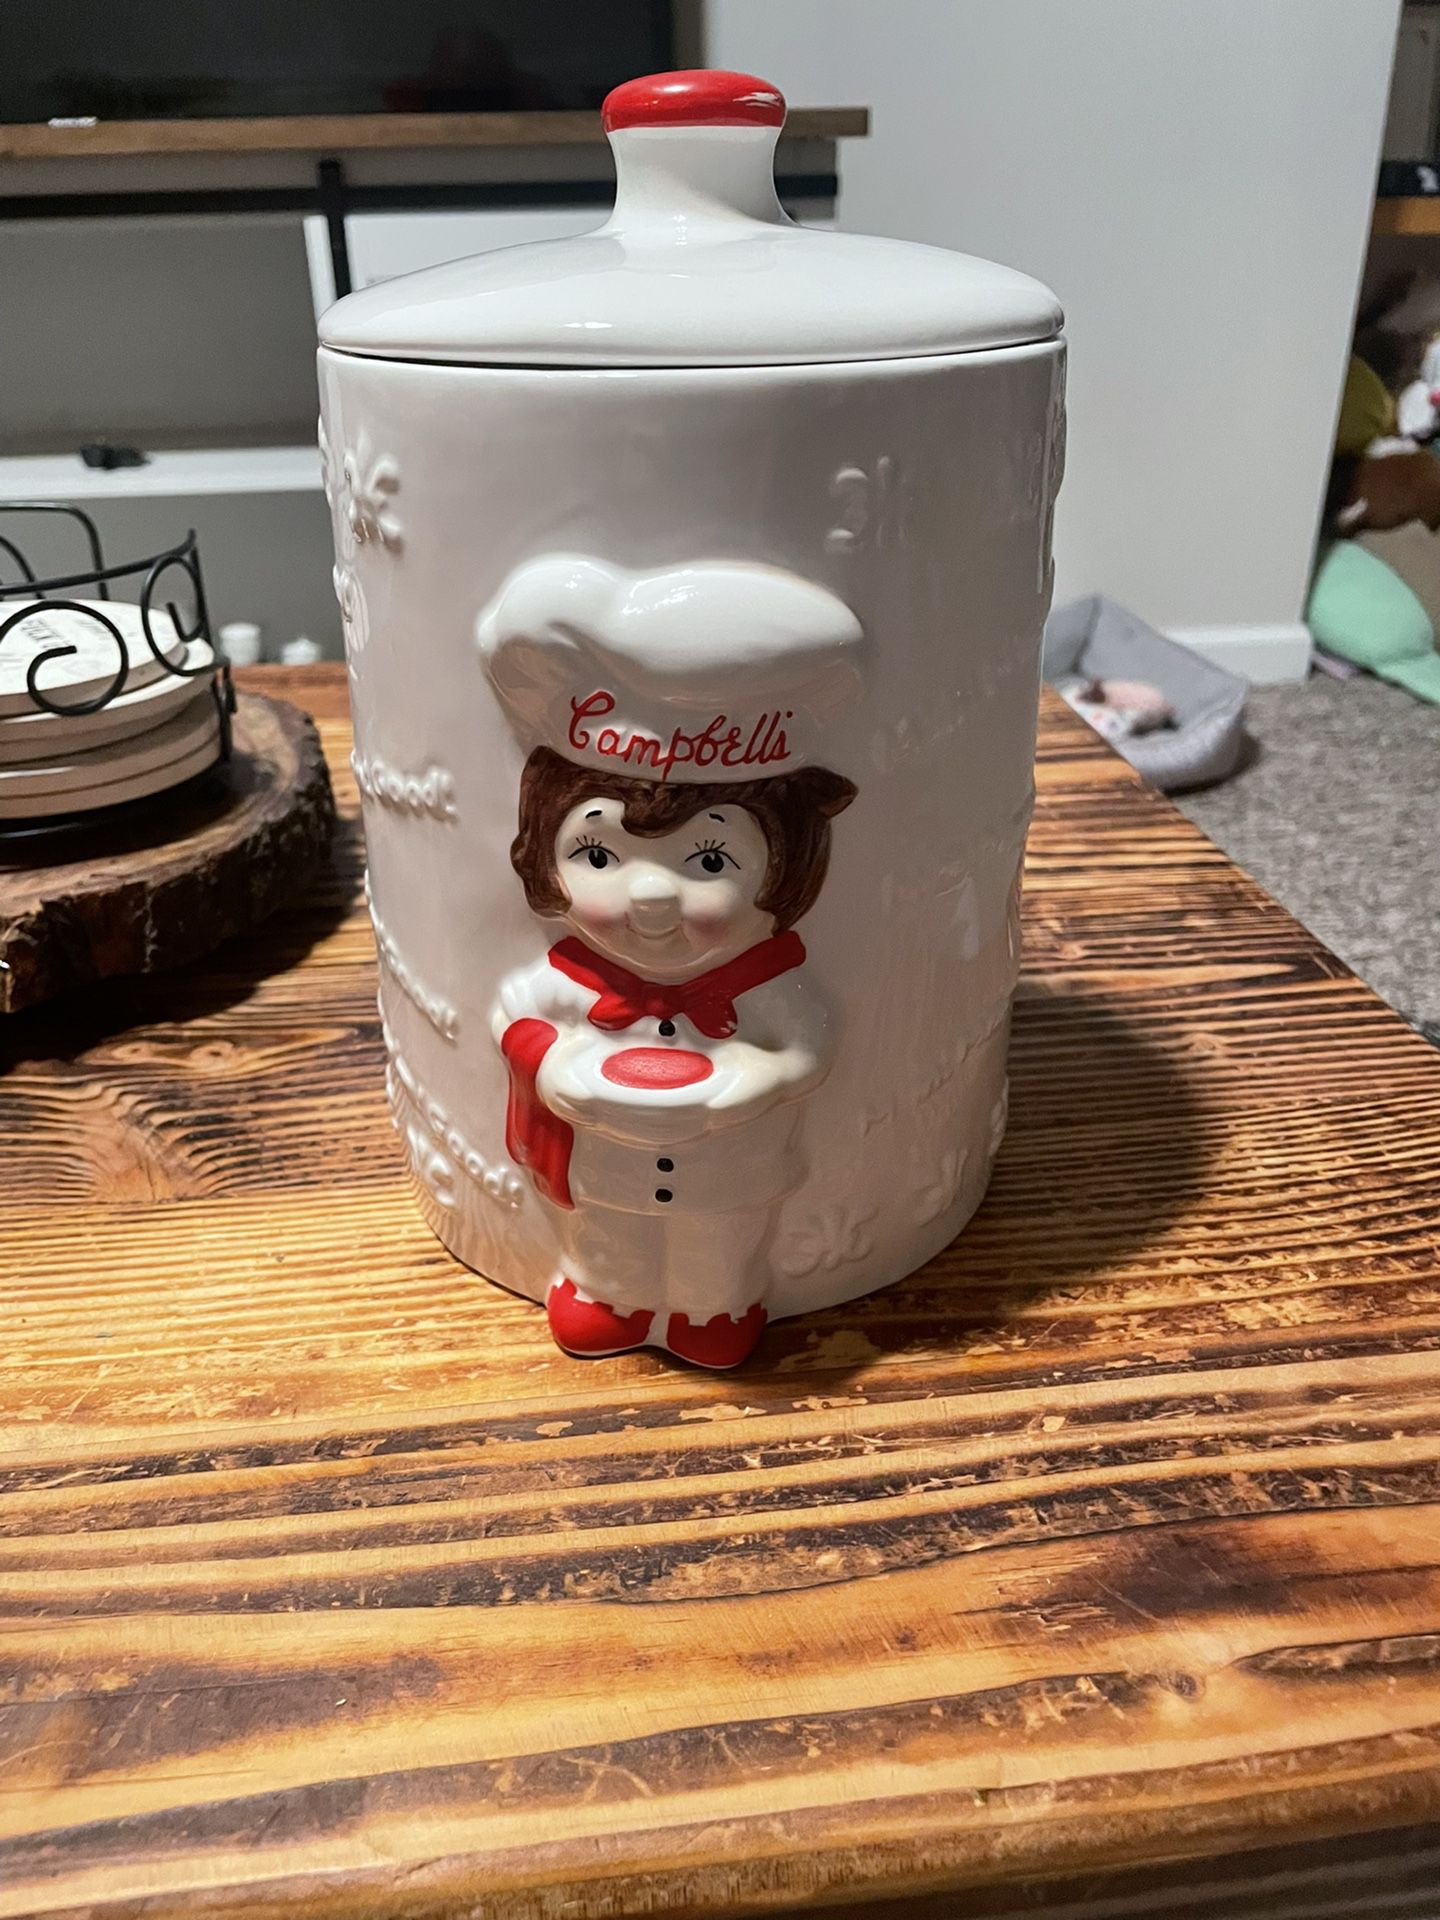 Canpbells Ceramic Cookie  Jar